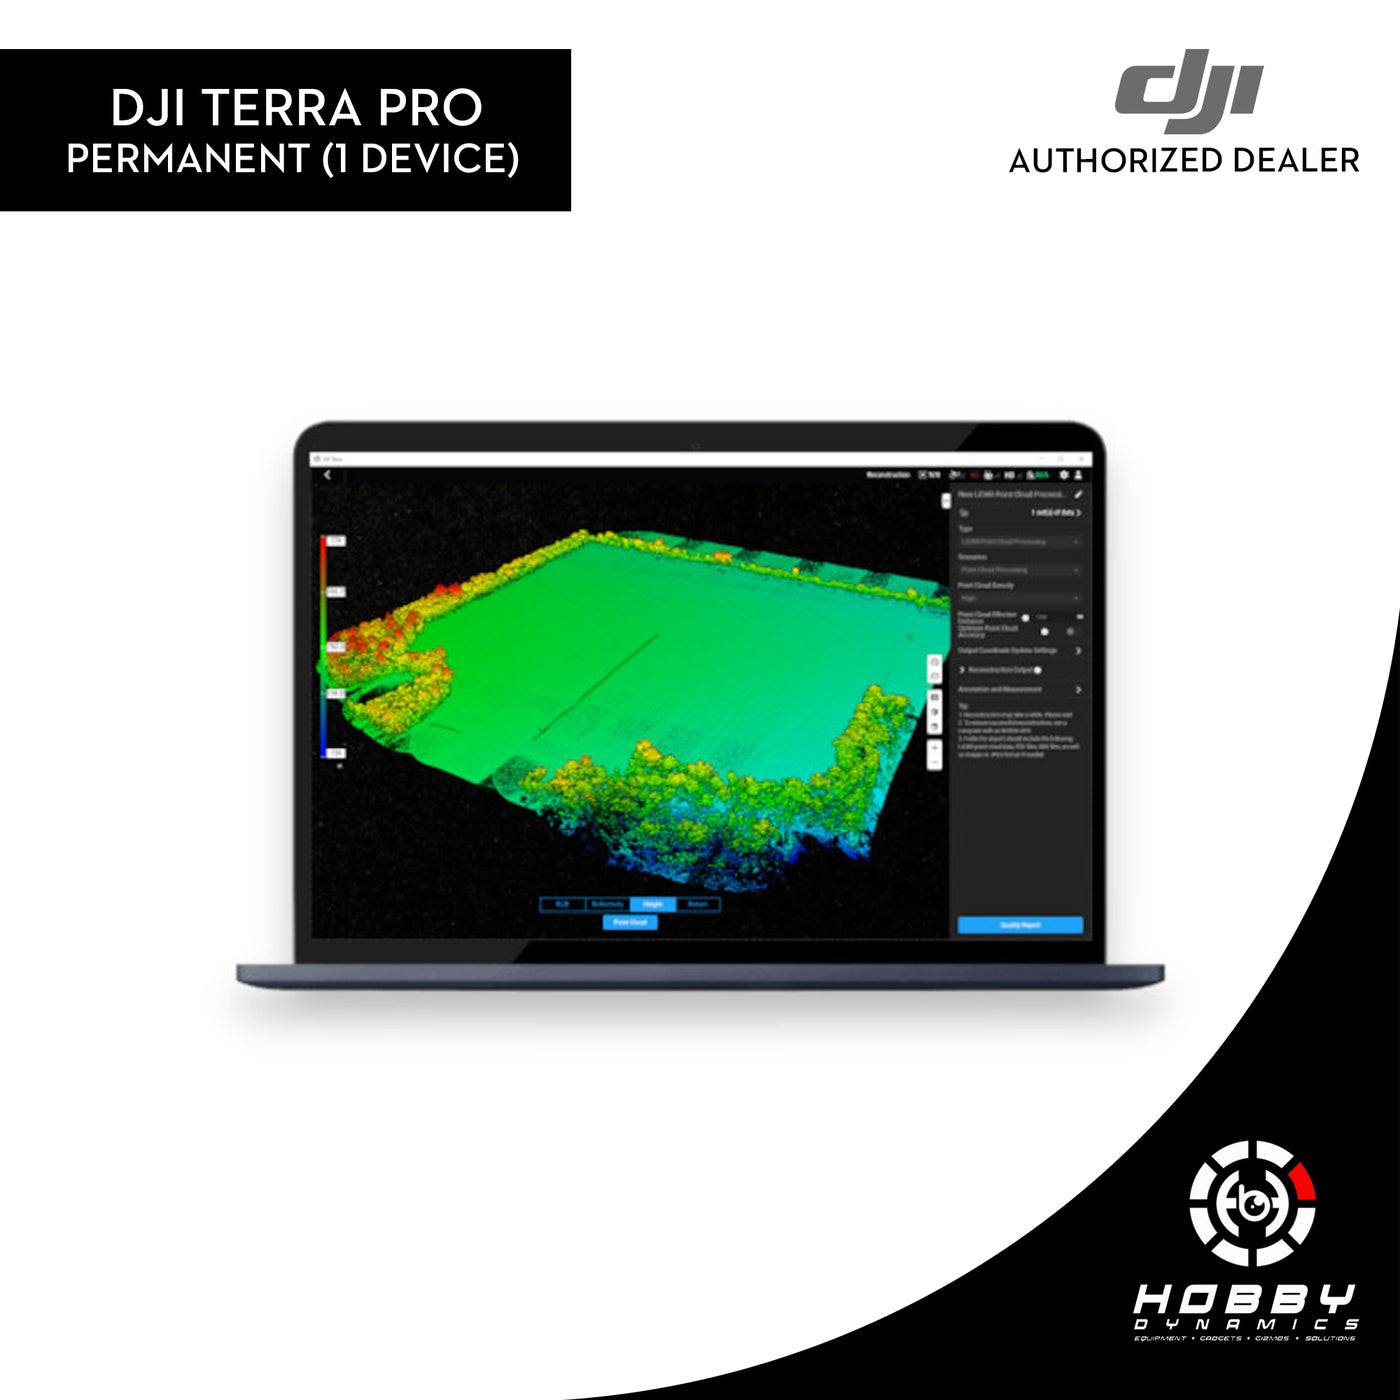 DJI Terra Pro Permanent (1 device)